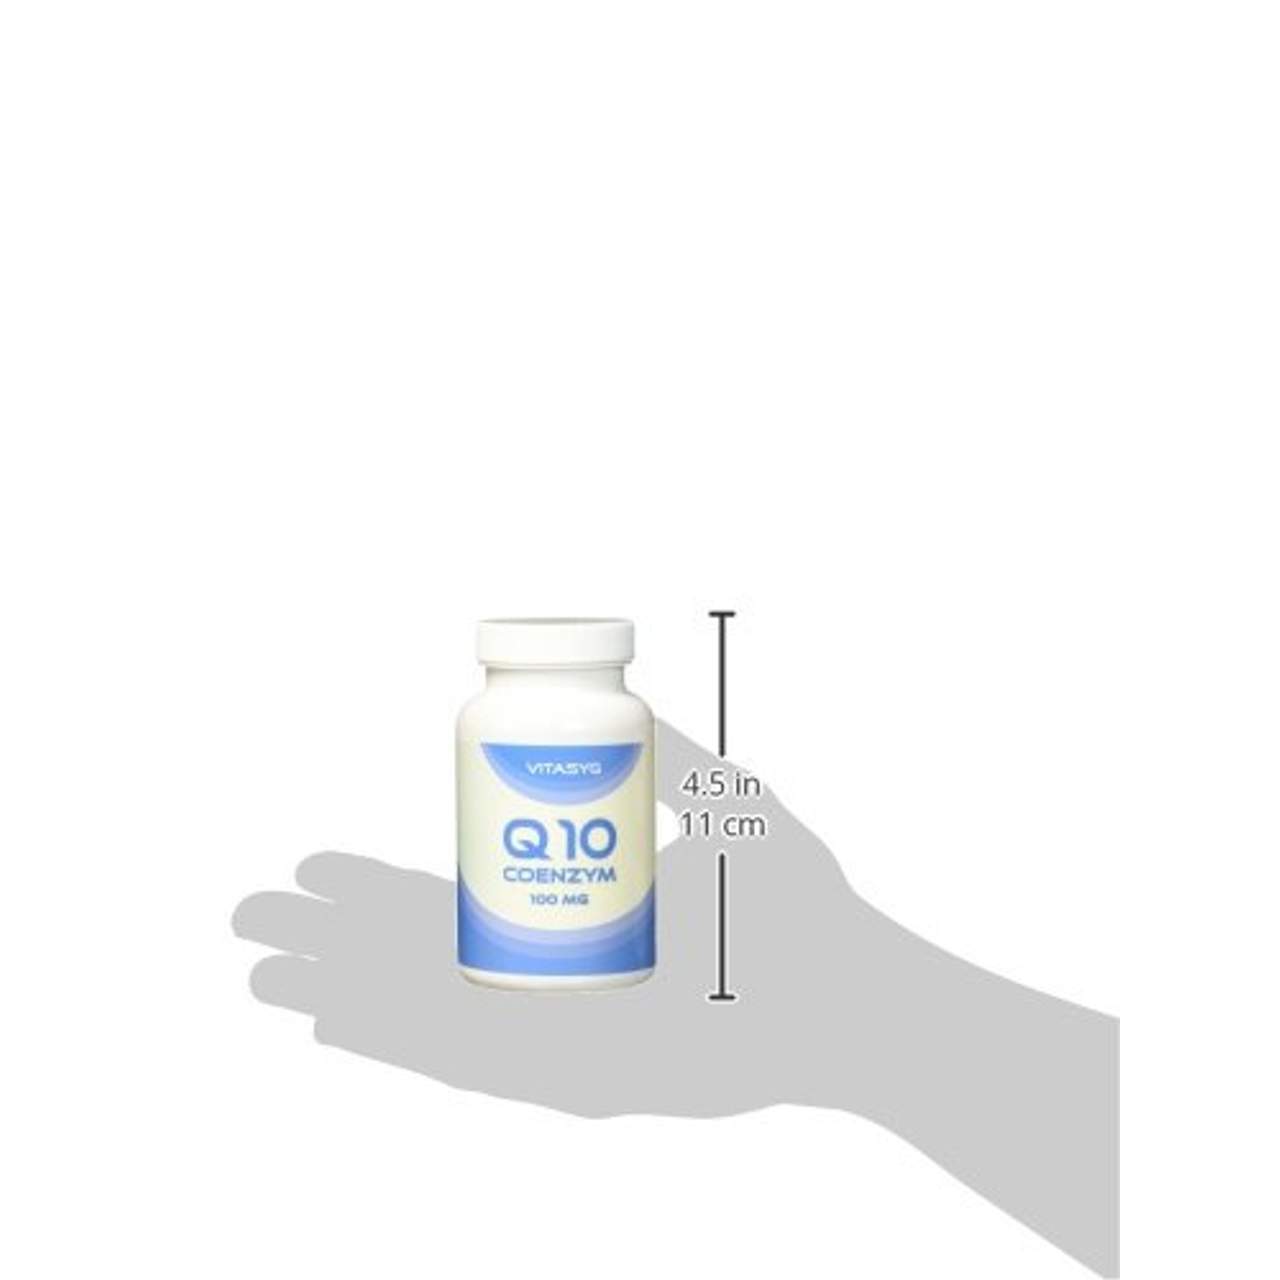 Vitasyg Coenzym Q10 120 Kapseln a 100 mg